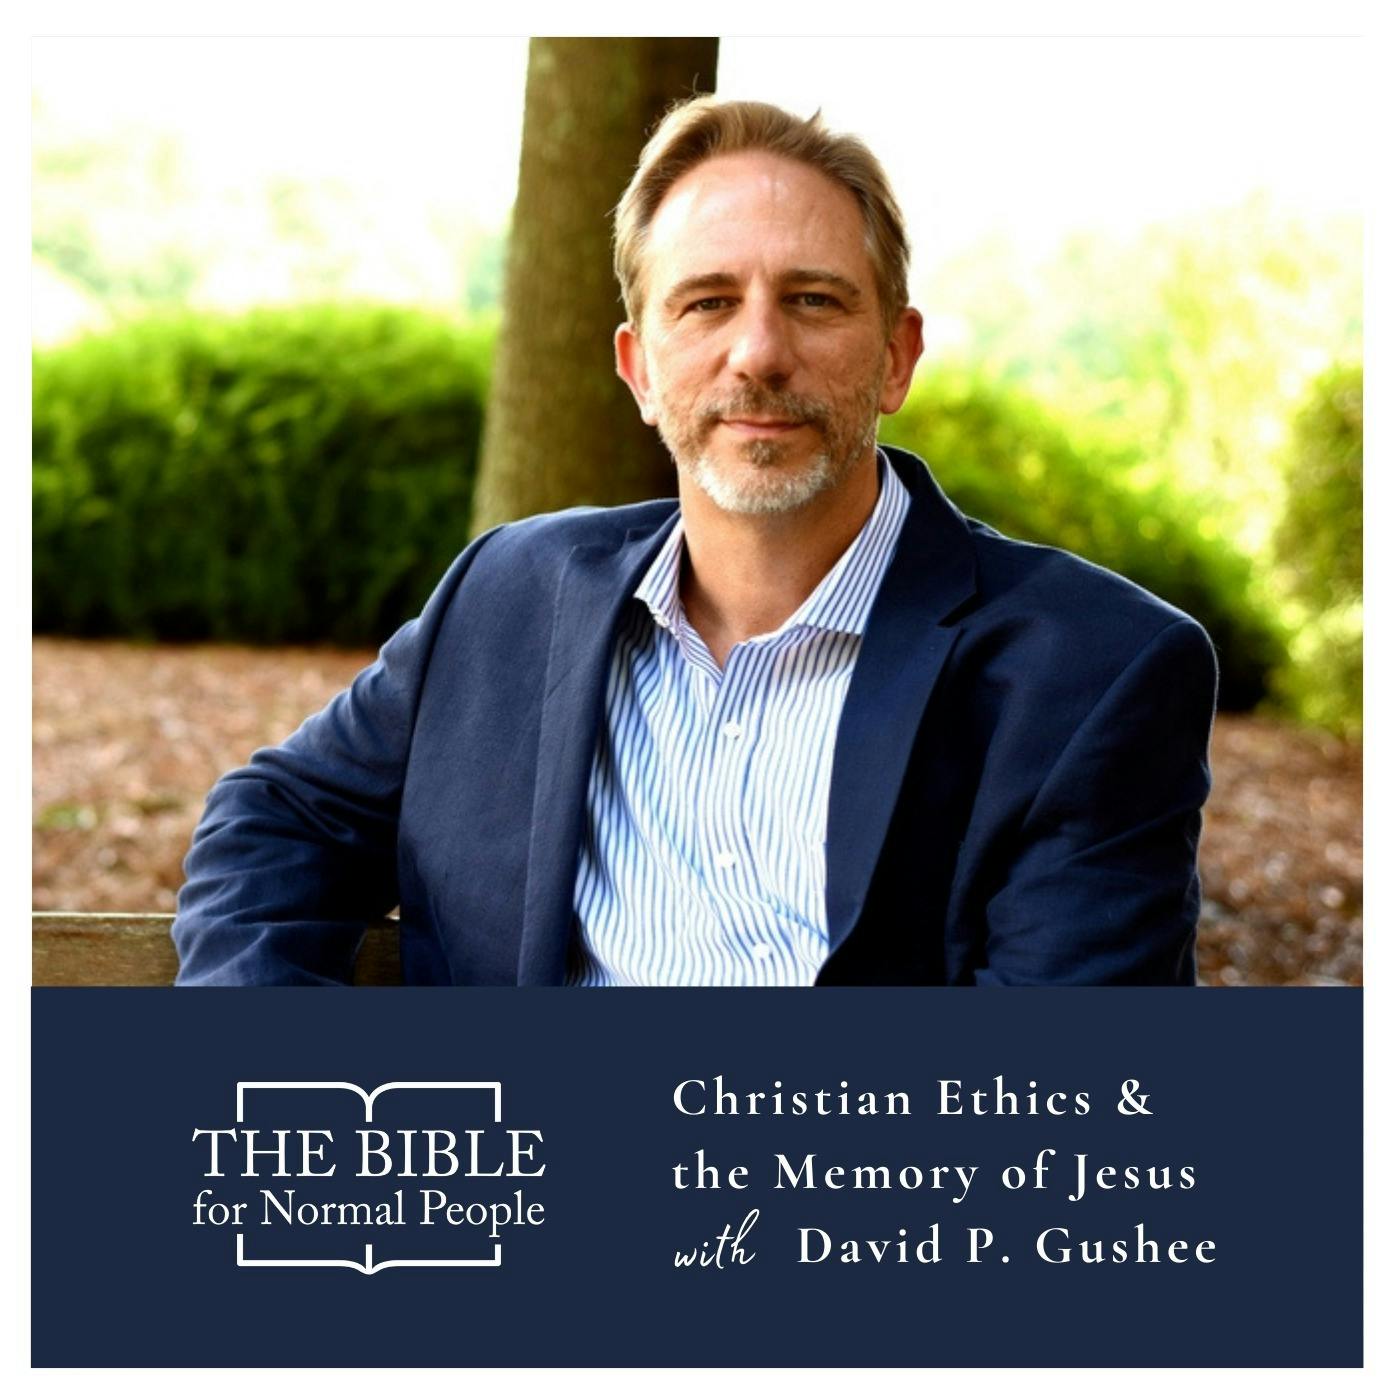 Episode 211: David P. Gushee - Christian Ethics & the Memory of Jesus